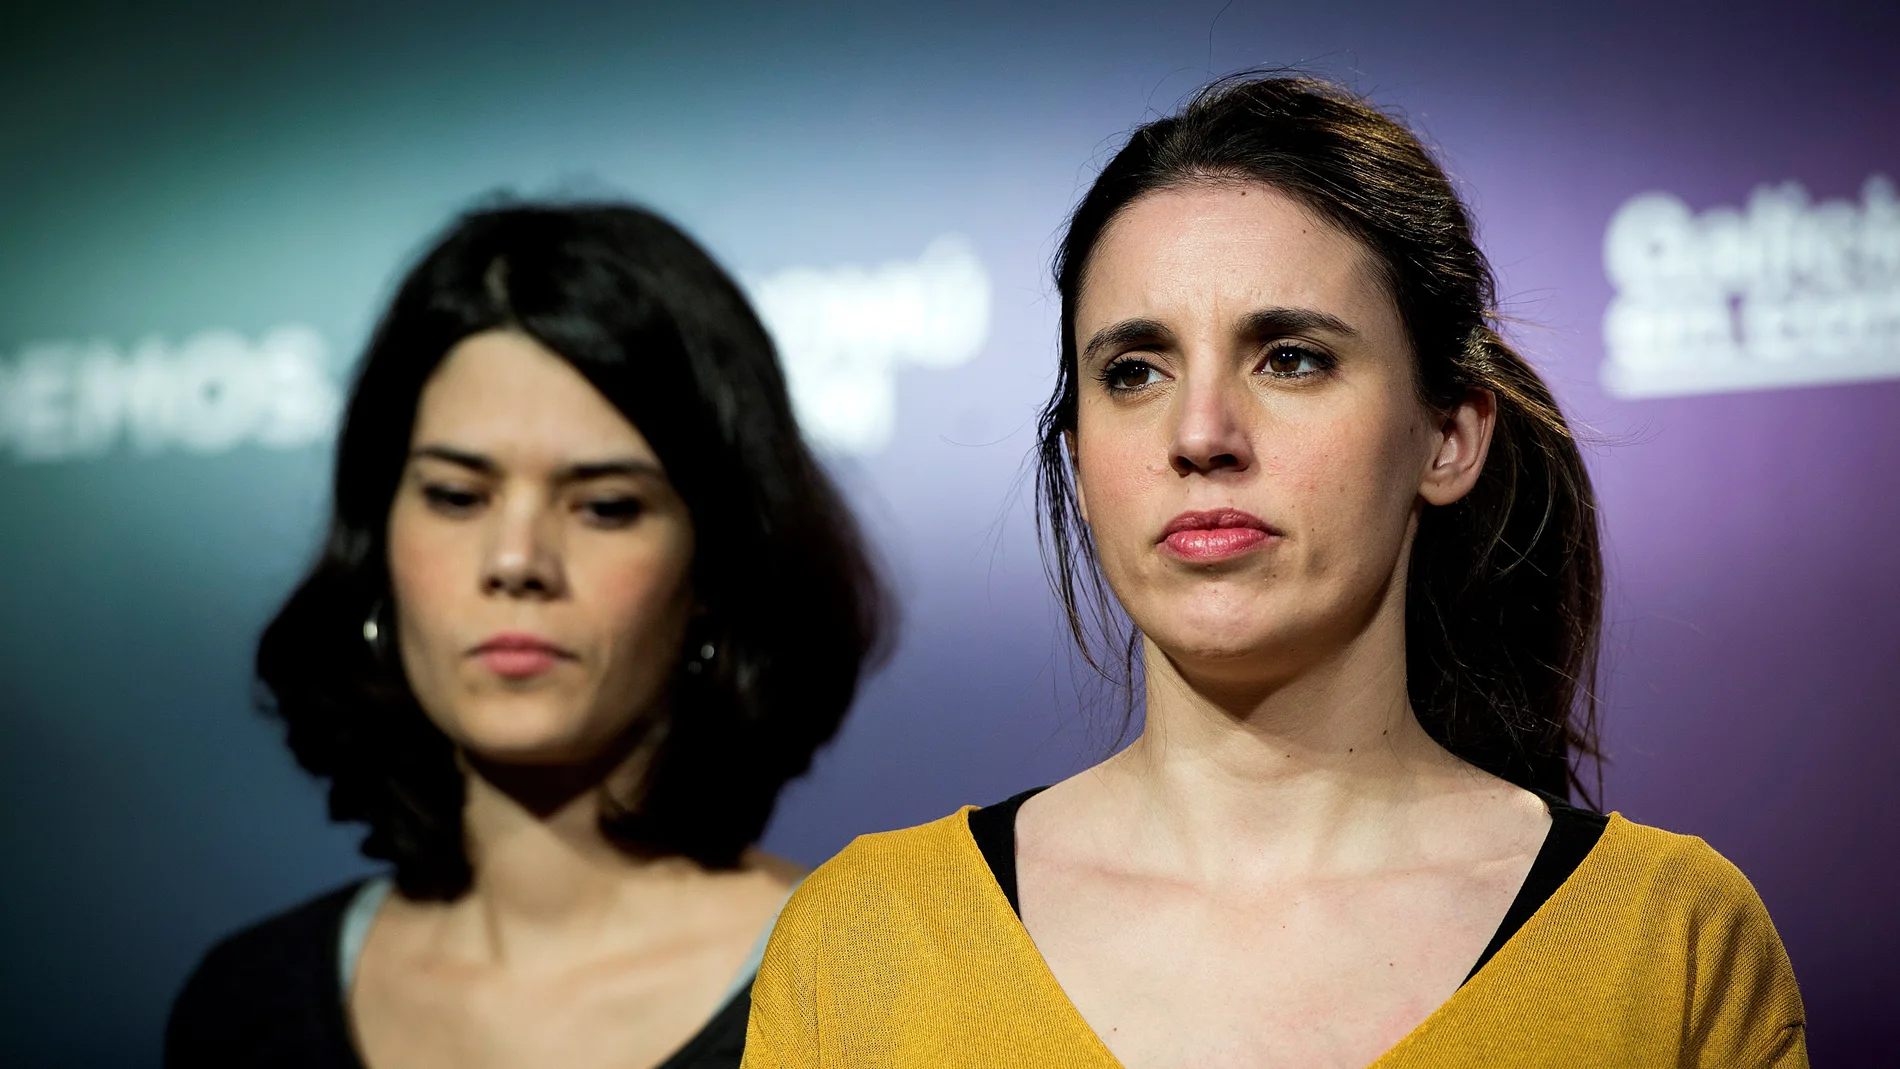 Las candidatas de Unidas Podemos, Isabel Serra e Irene Montero